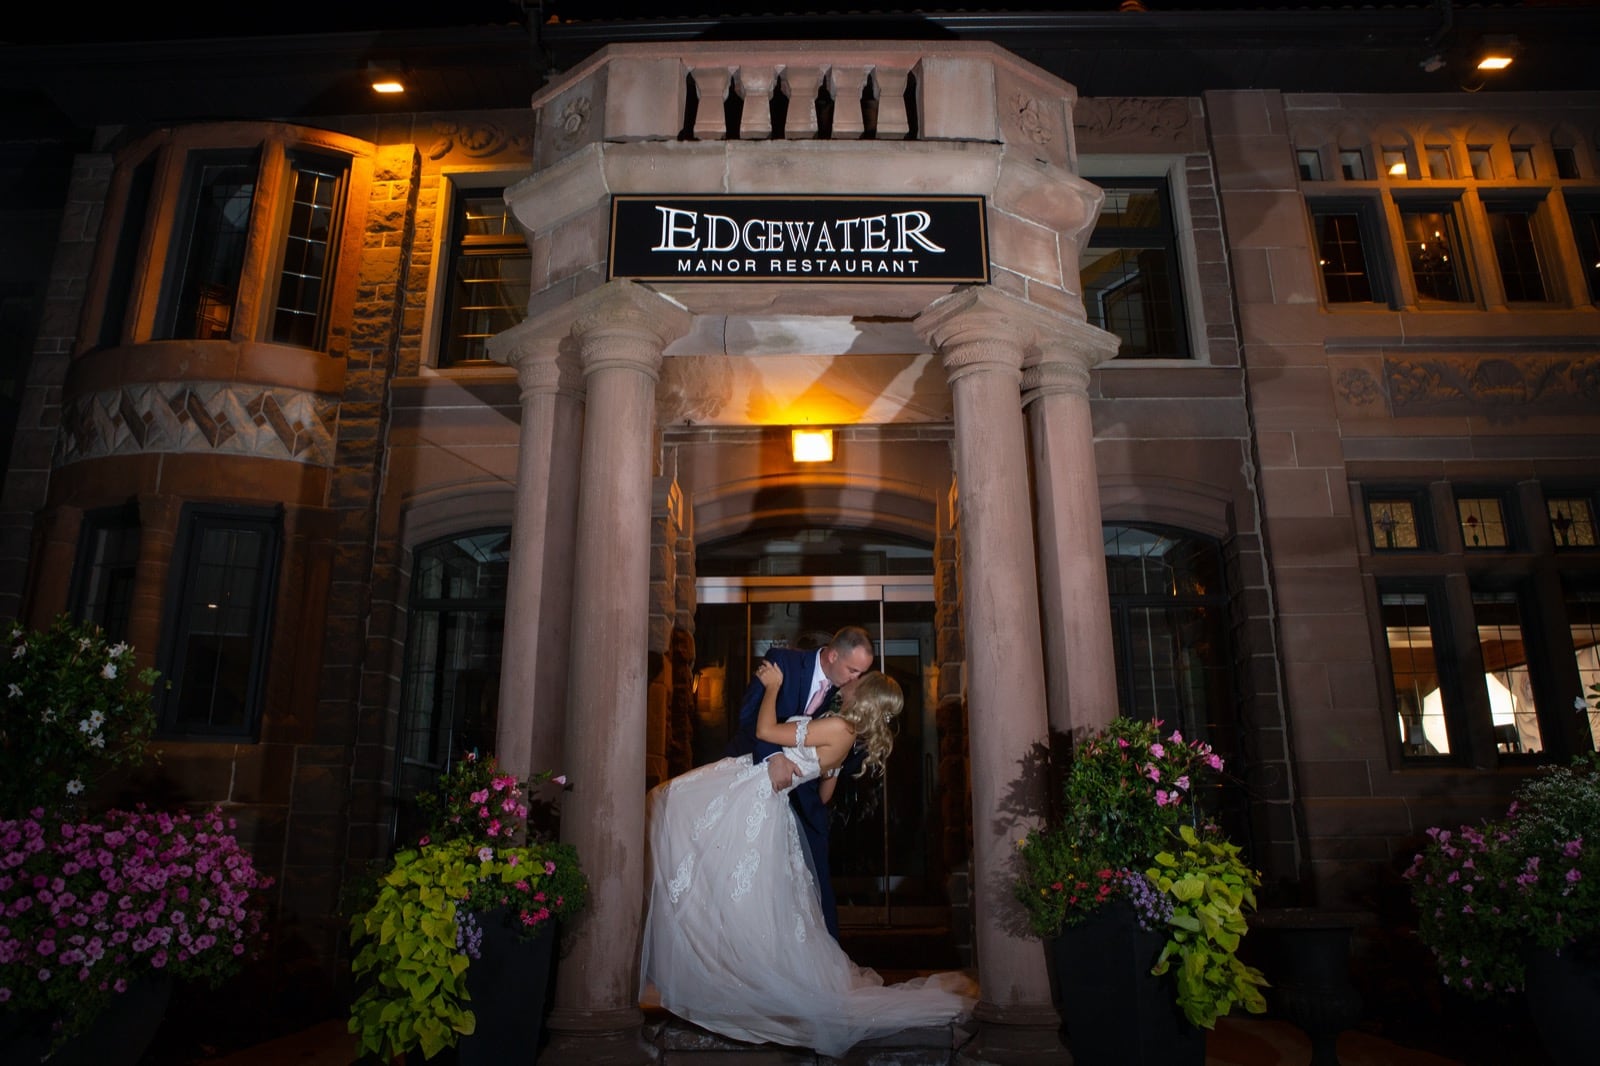 Wedding Photography at the Edgewater Manor Restaurant